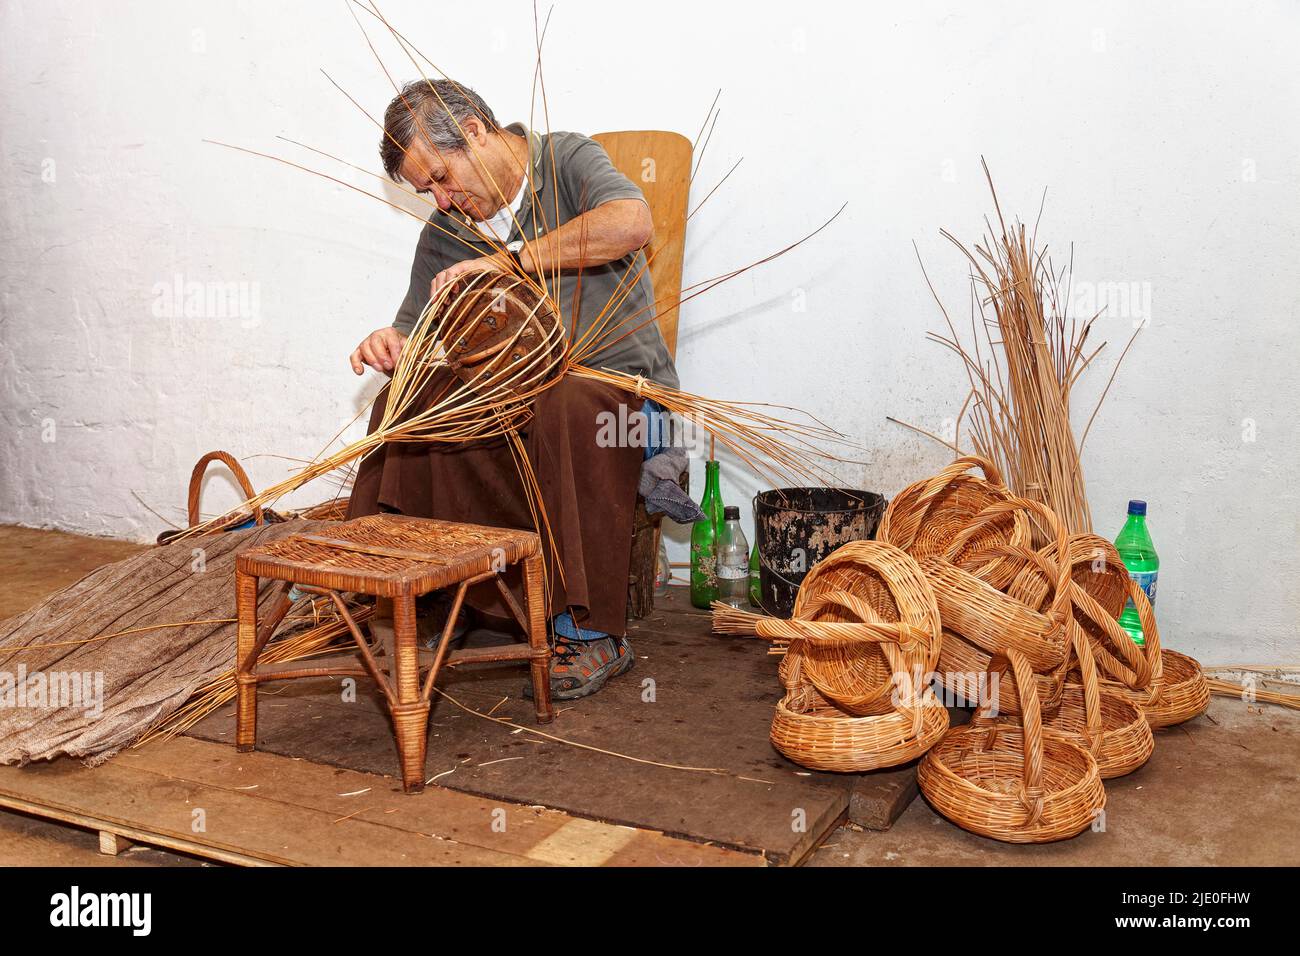 Basket maker, basket weaver, basketry, wicker rod, show workshop, workshop, Cafe Relogio, Camacha, Madeira, officially Autonomous Region of Madeira Stock Photo